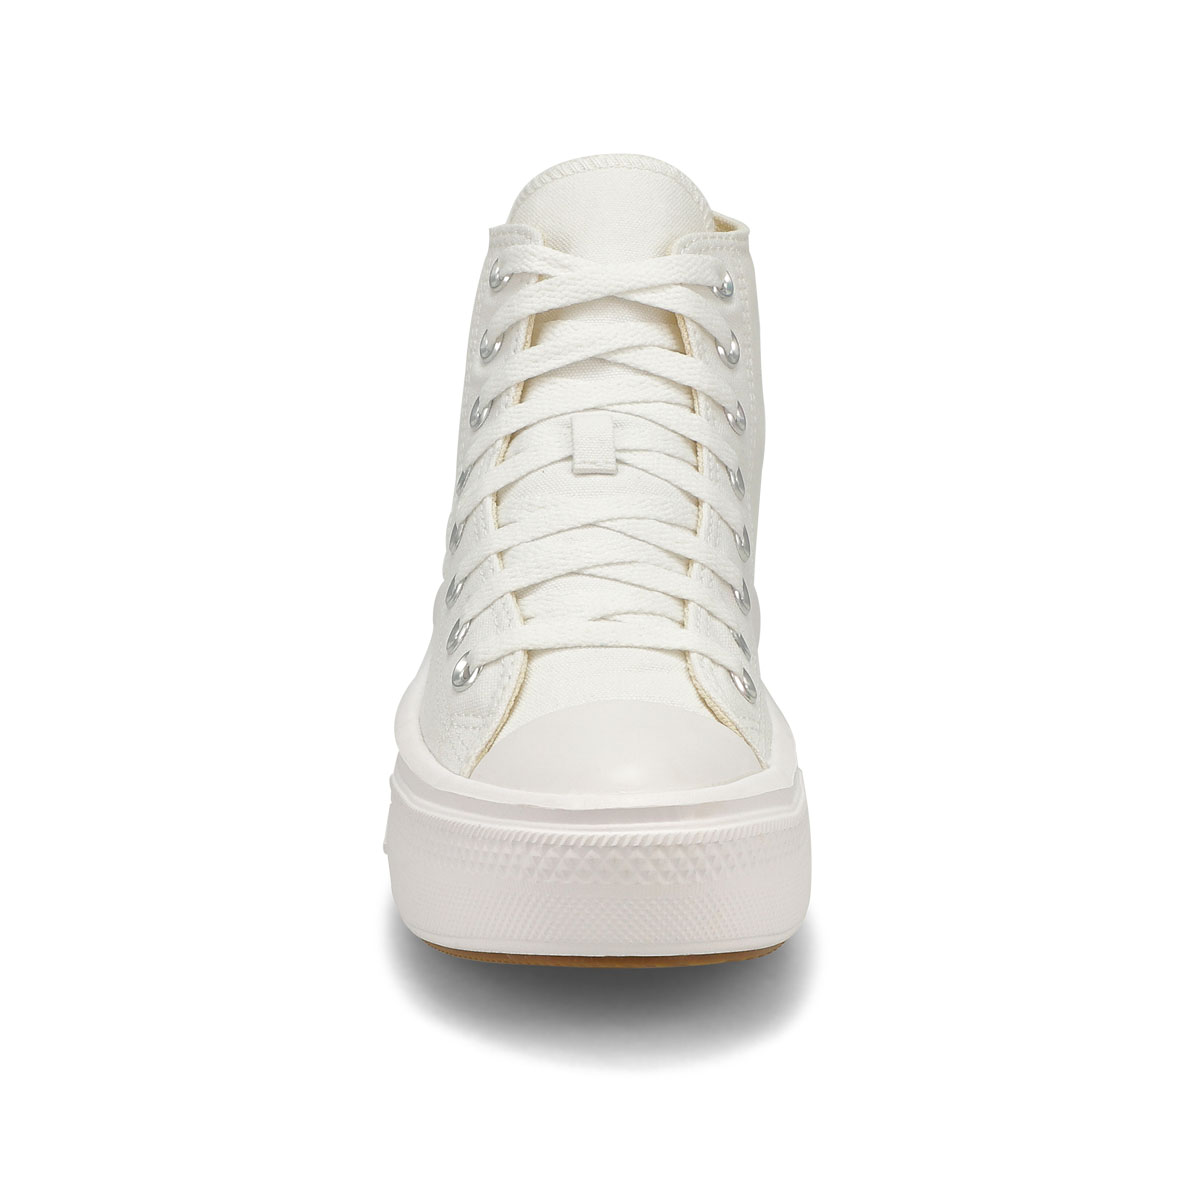 Women's Chuck Taylor All Star Move Hi Top Platform Sneaker - White/White